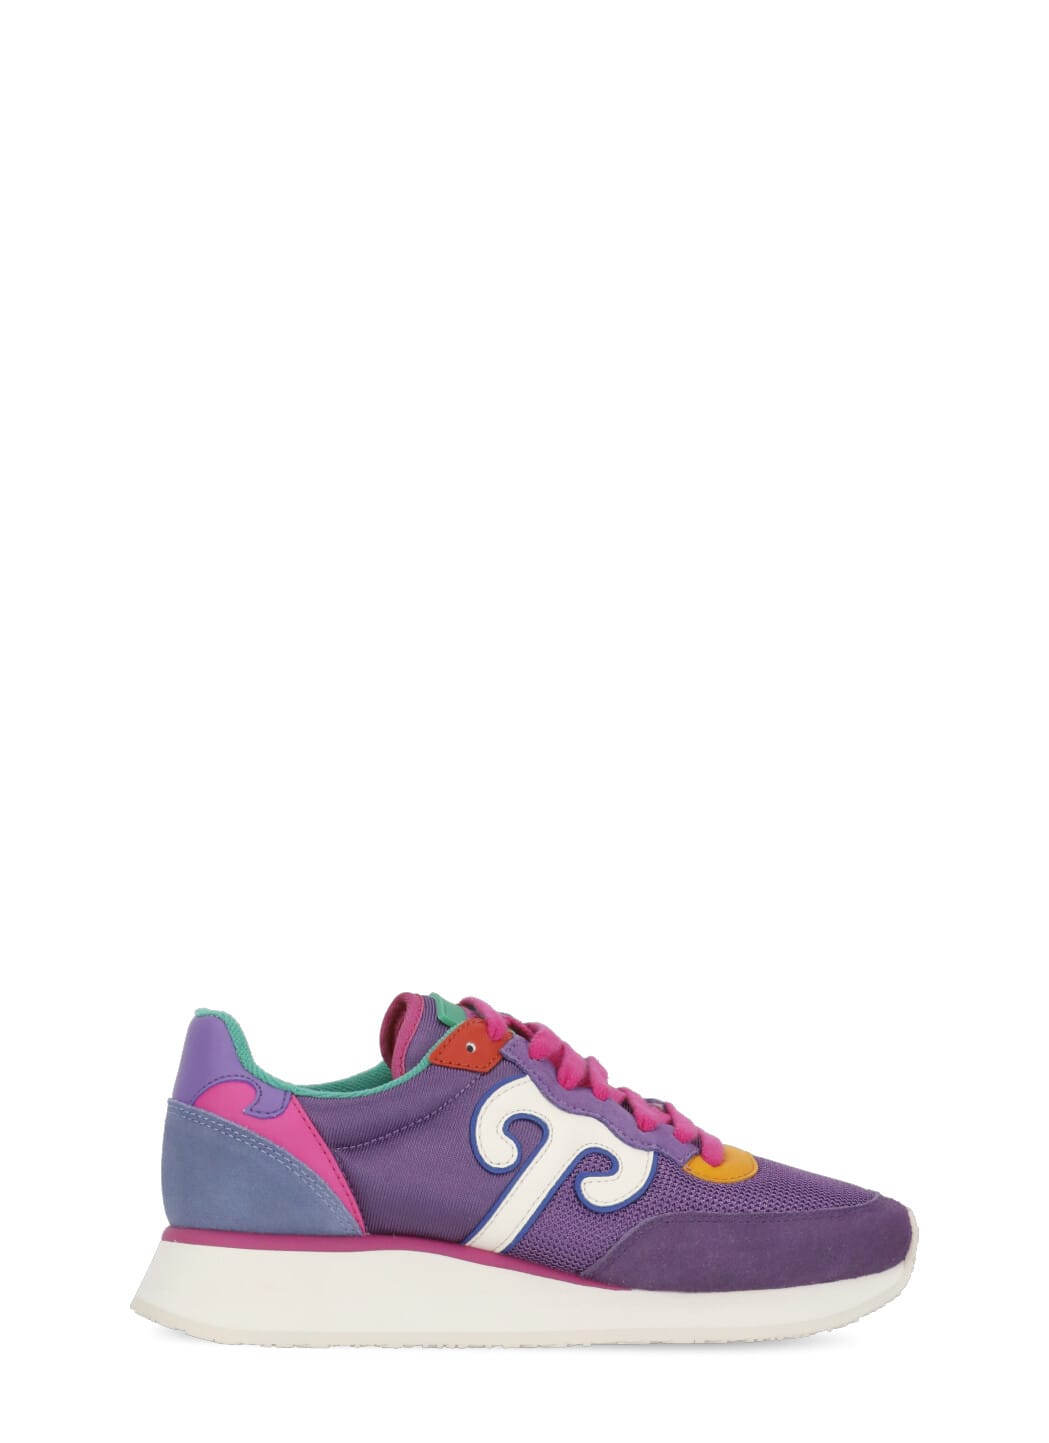 Wushu Ruyi Master Sport 310 Sneakers In Purple